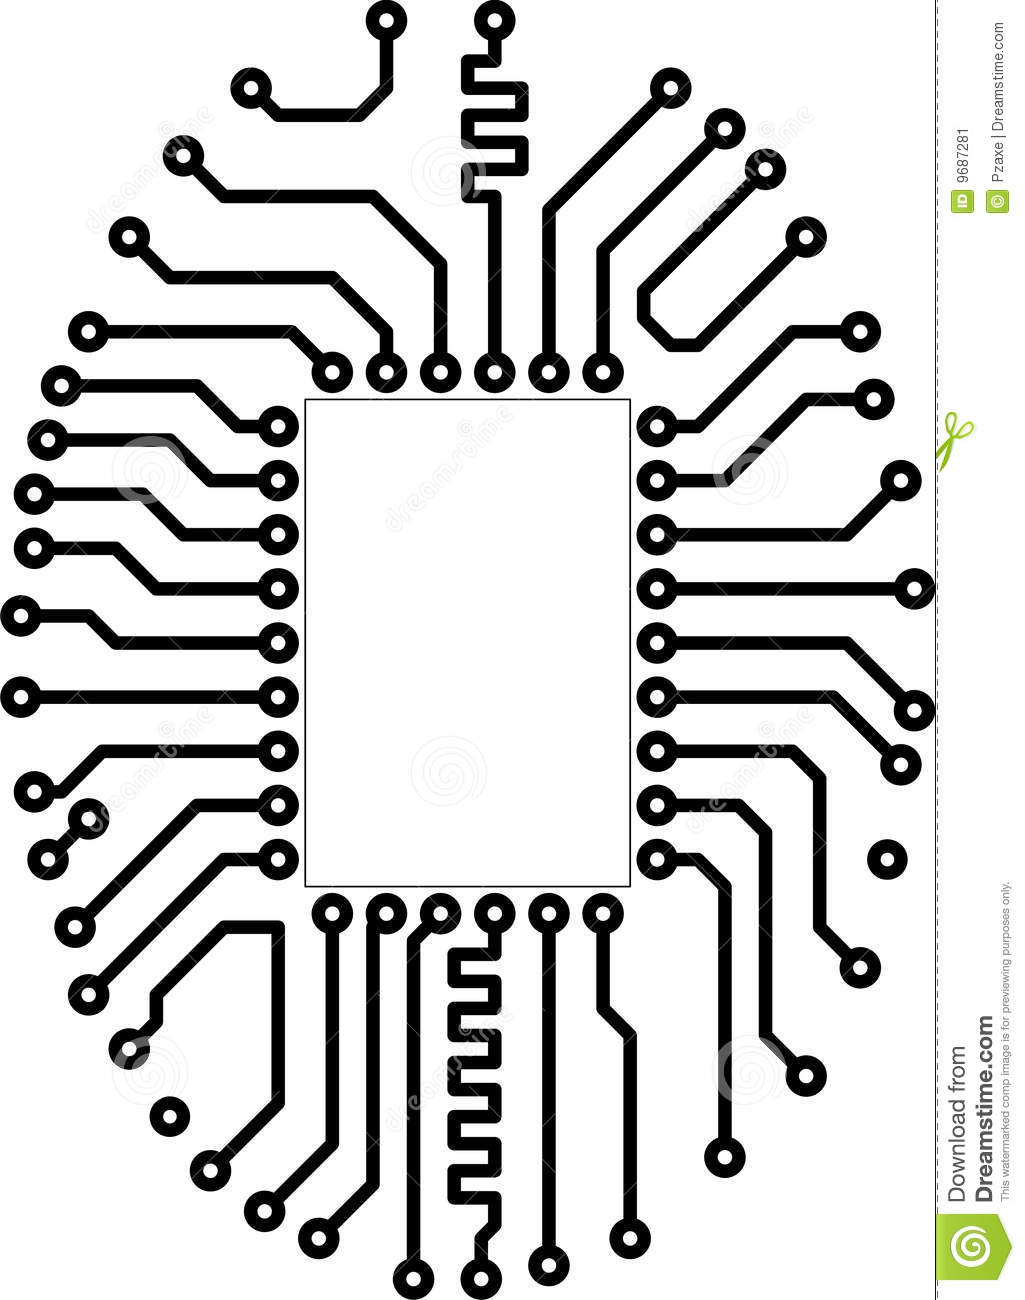 Hi Tech Vector Circuit Board Blank Vignette Stock Image   Image    